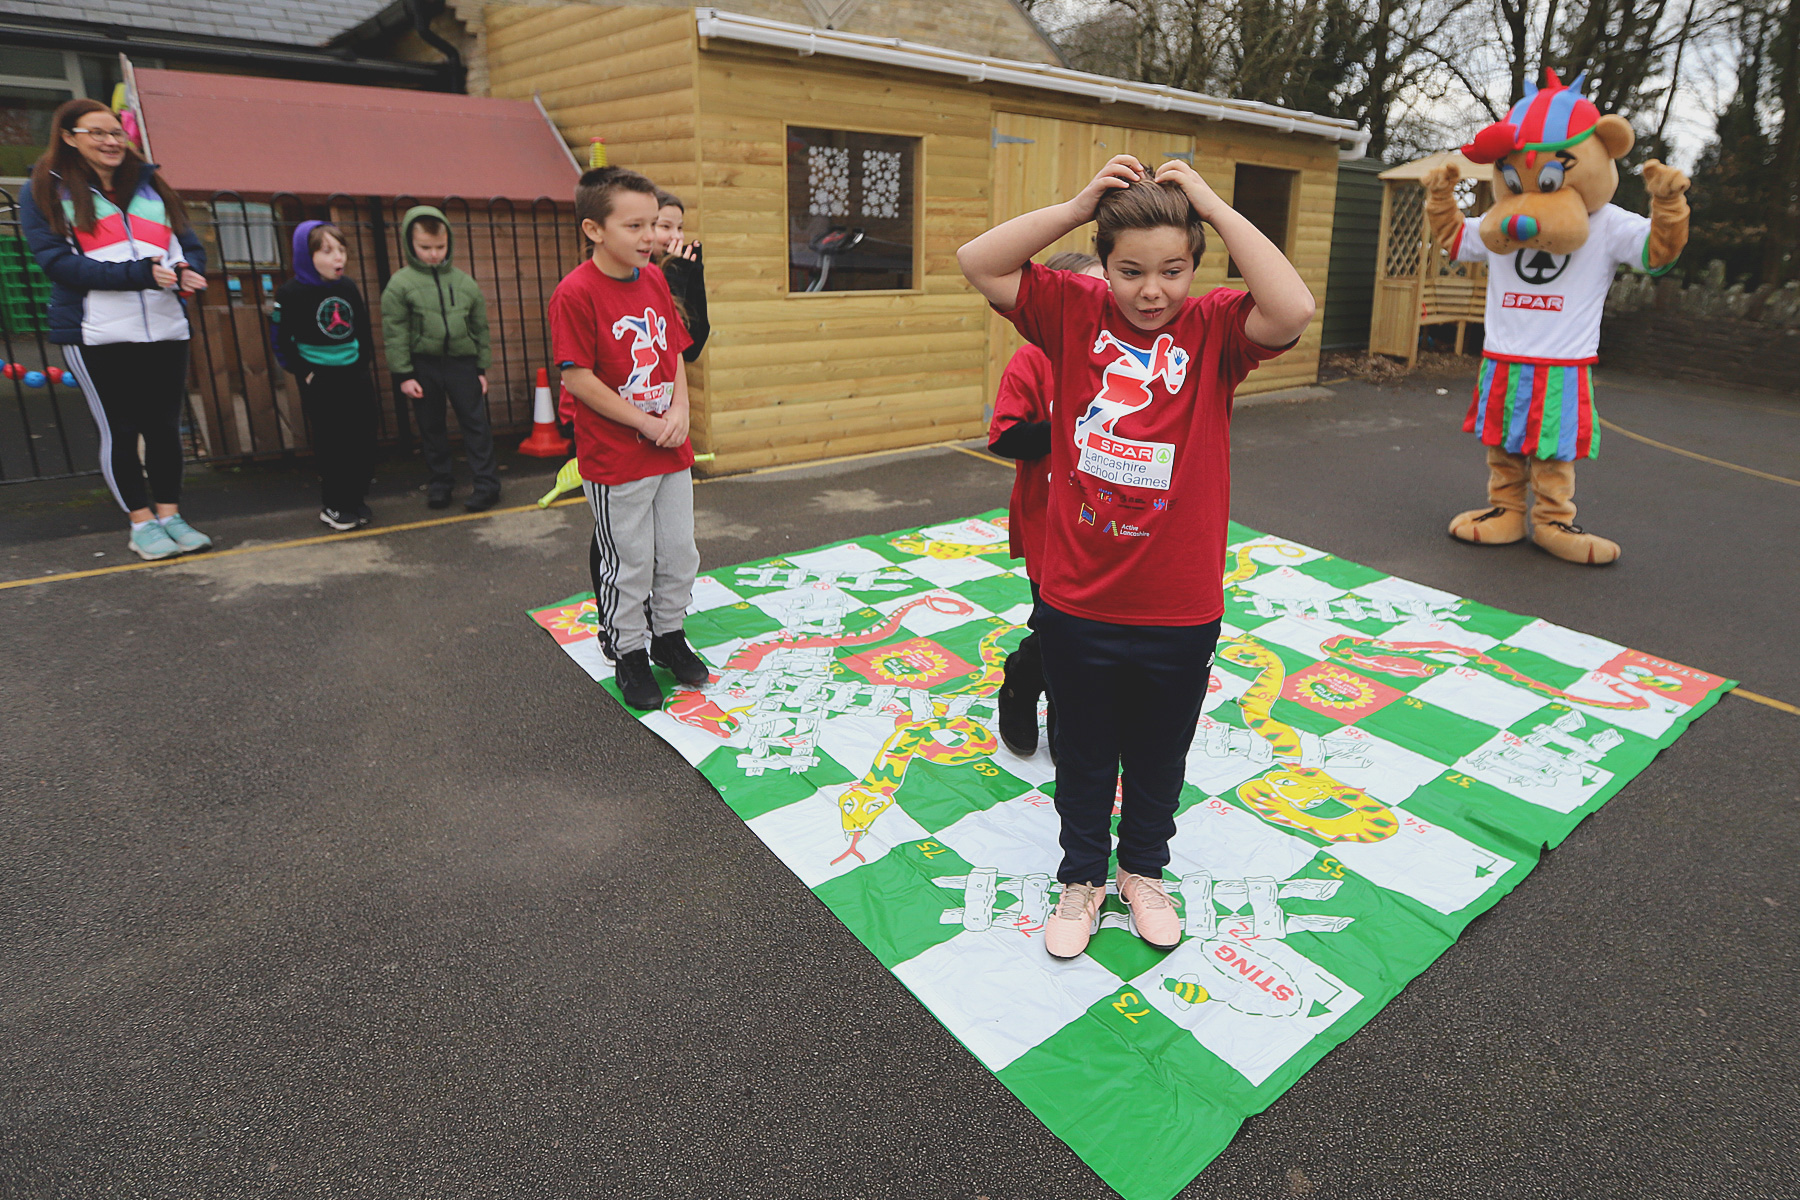 SPAR to continue sponsorship of Lancashire School Games